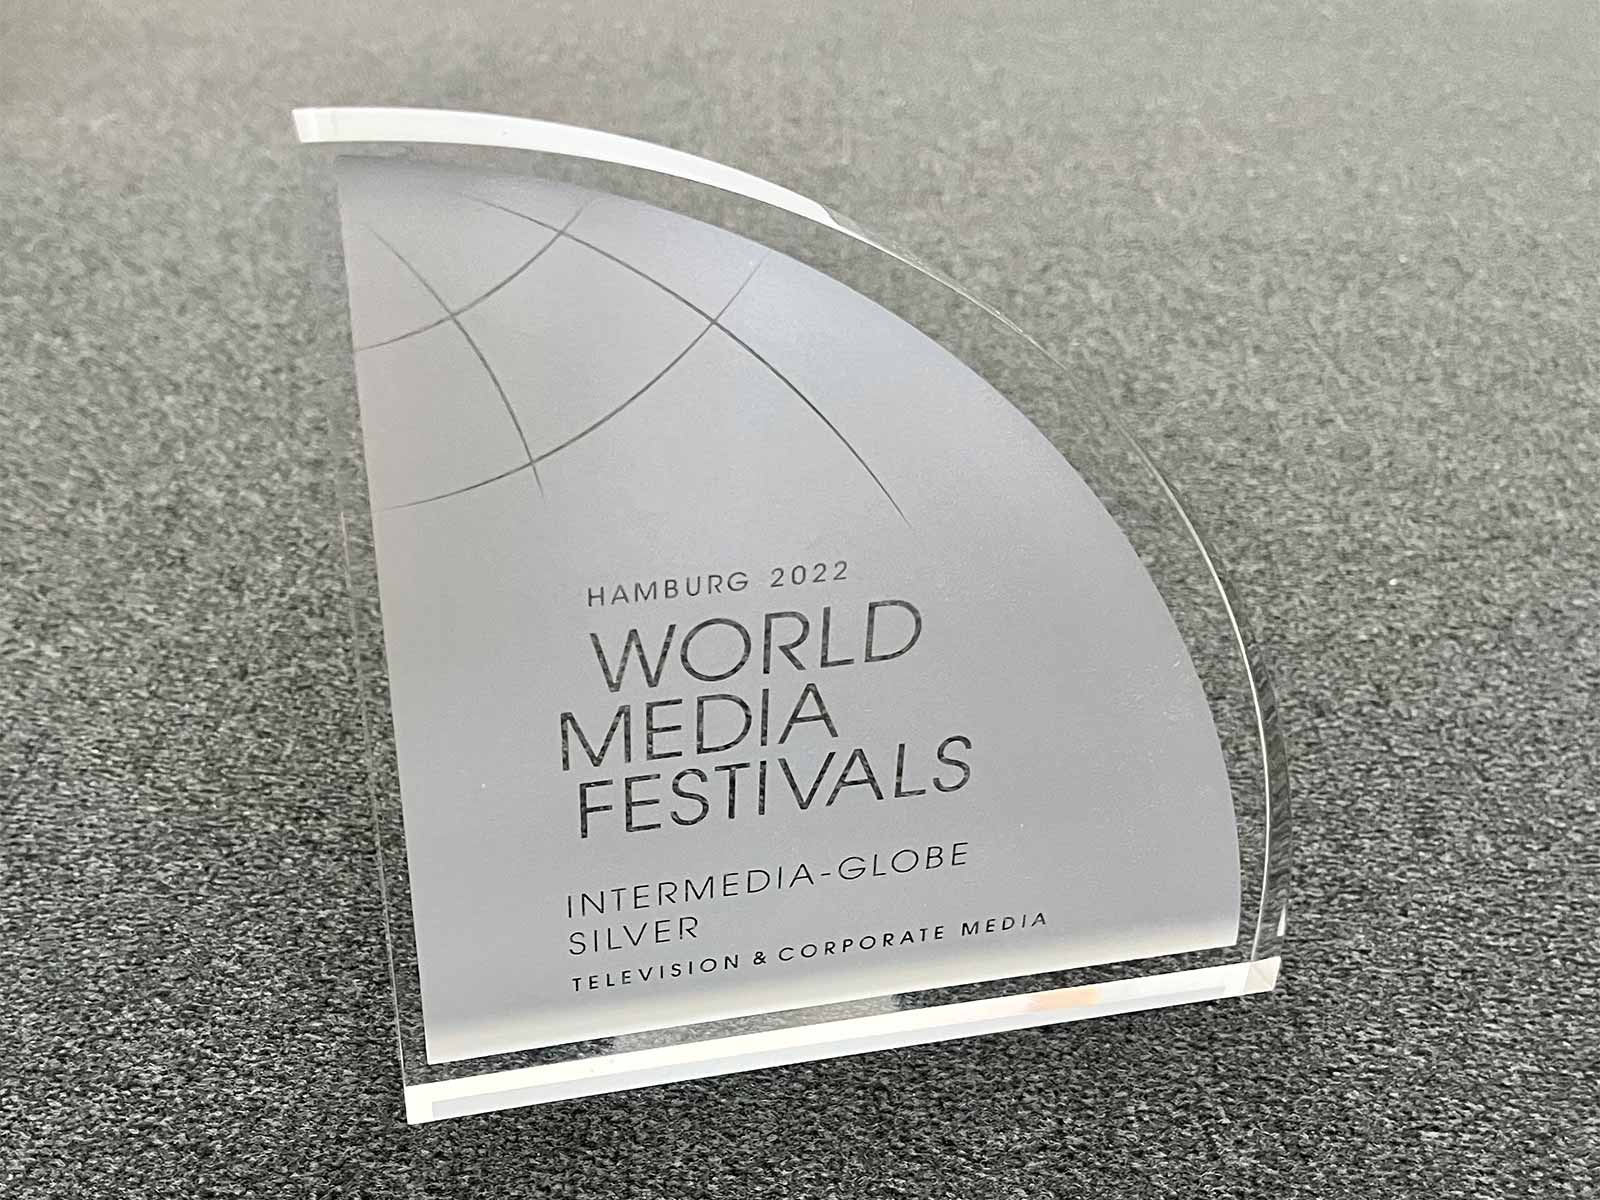 Caterpillar Energy Solutions gewinnt den Intermedia-Globe SILVER Award 